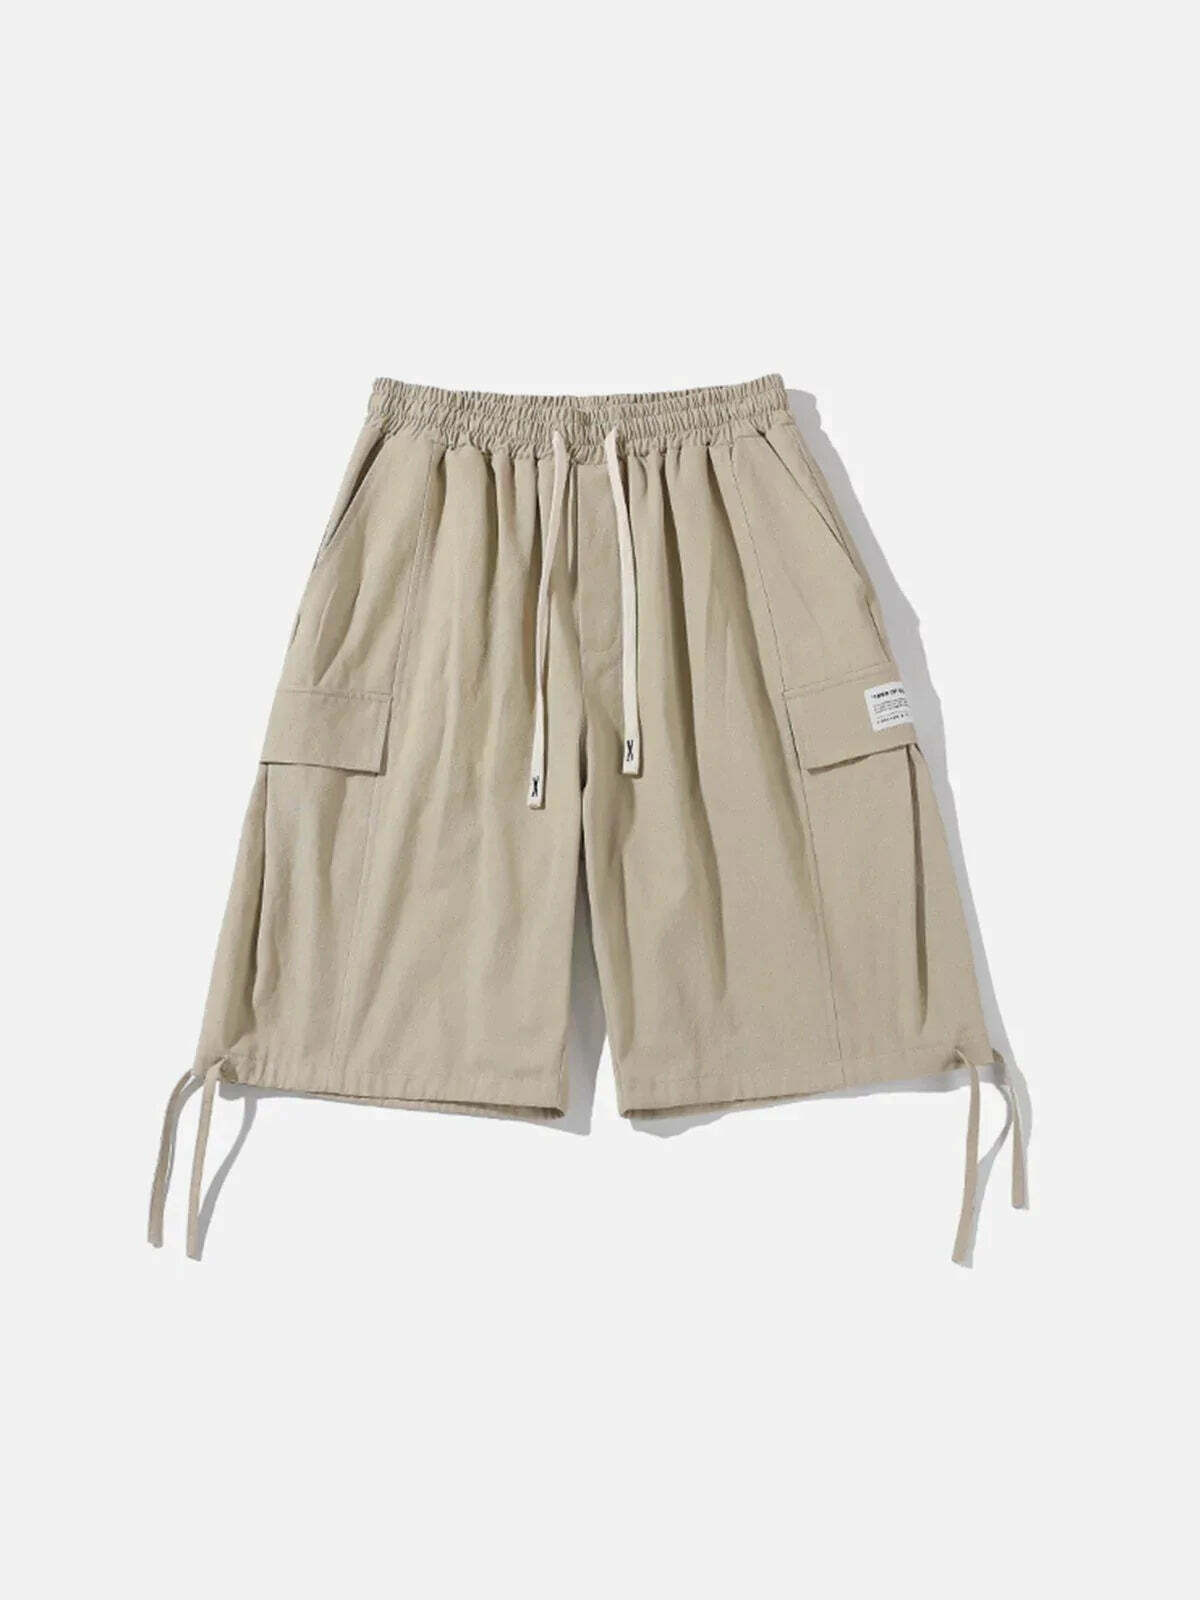 cargo pocketed utility shorts edgy & urban streetwear 5638